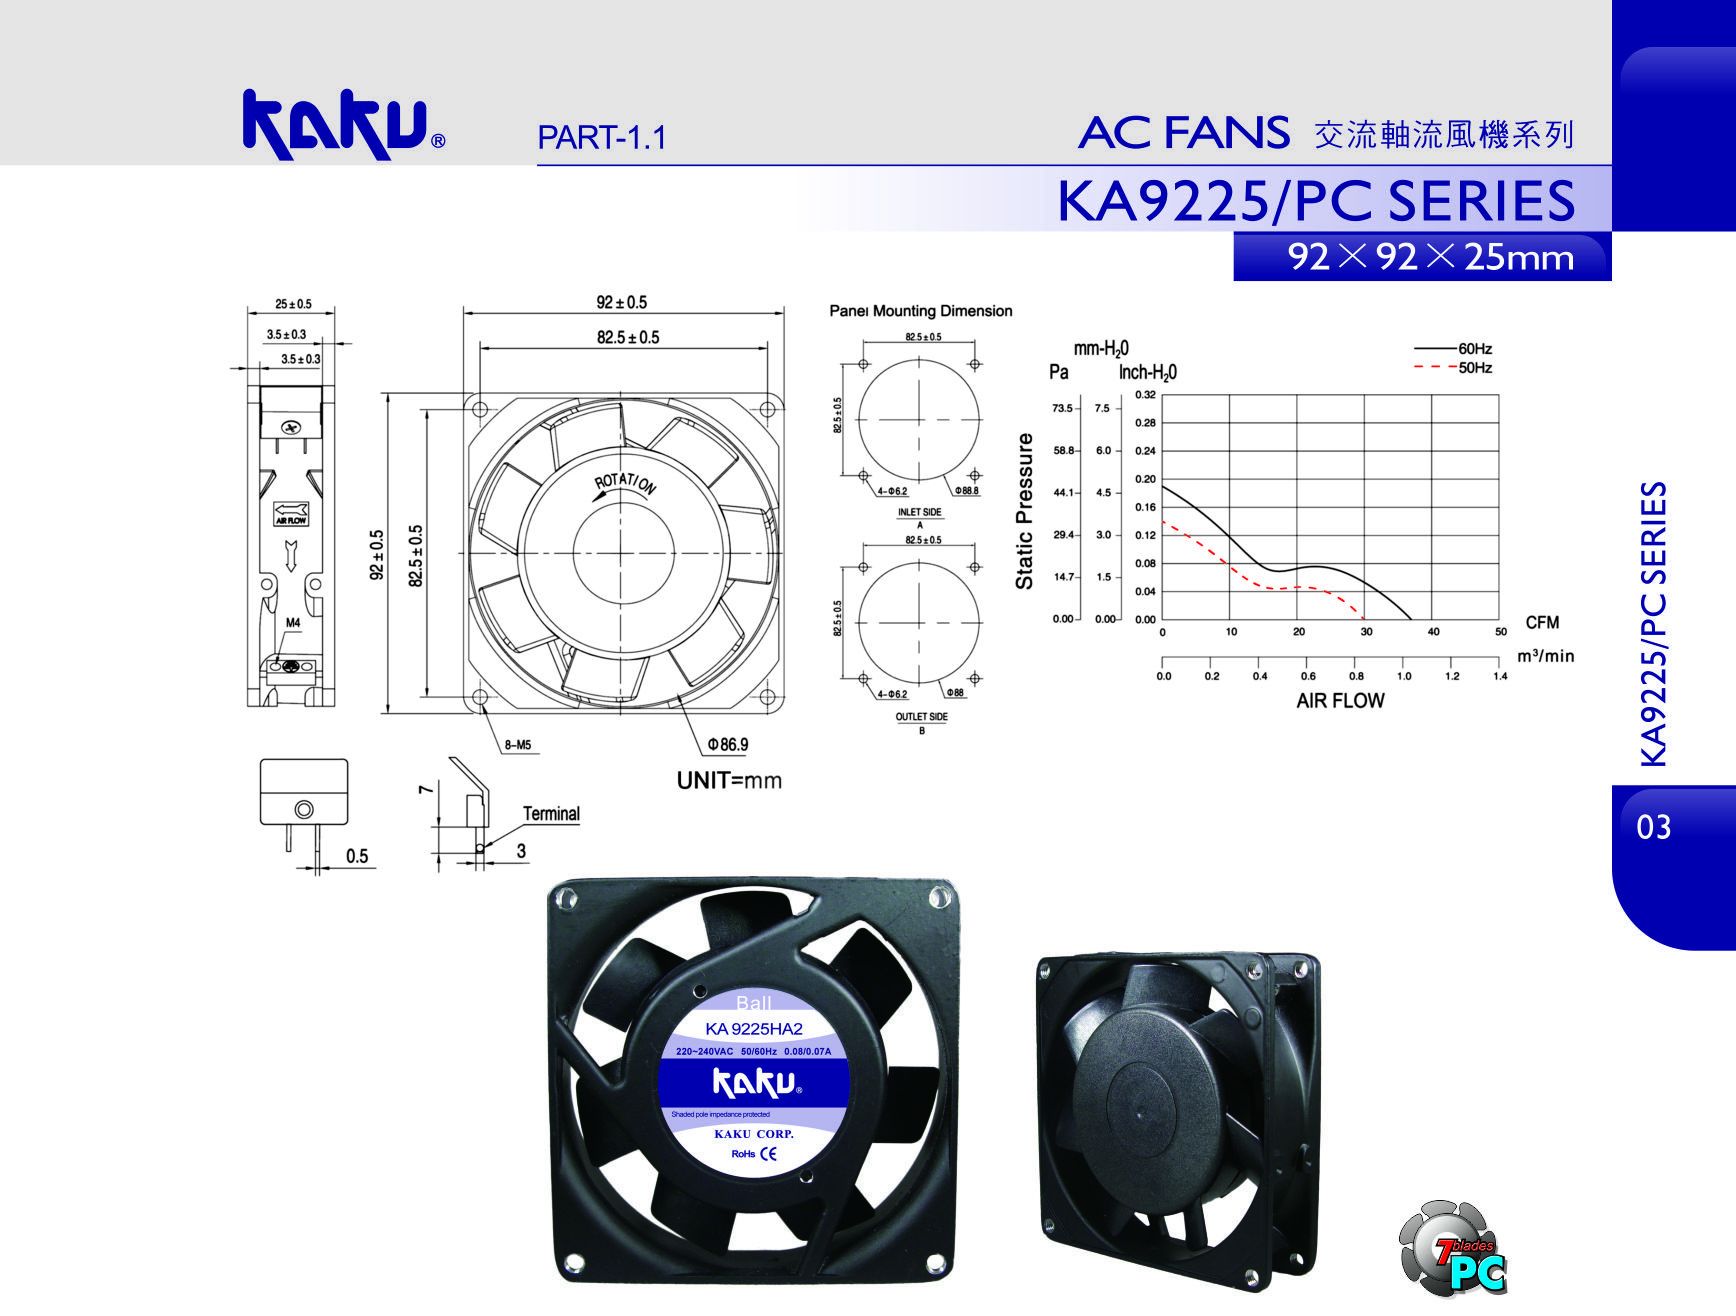 KA9225/PC SERIES